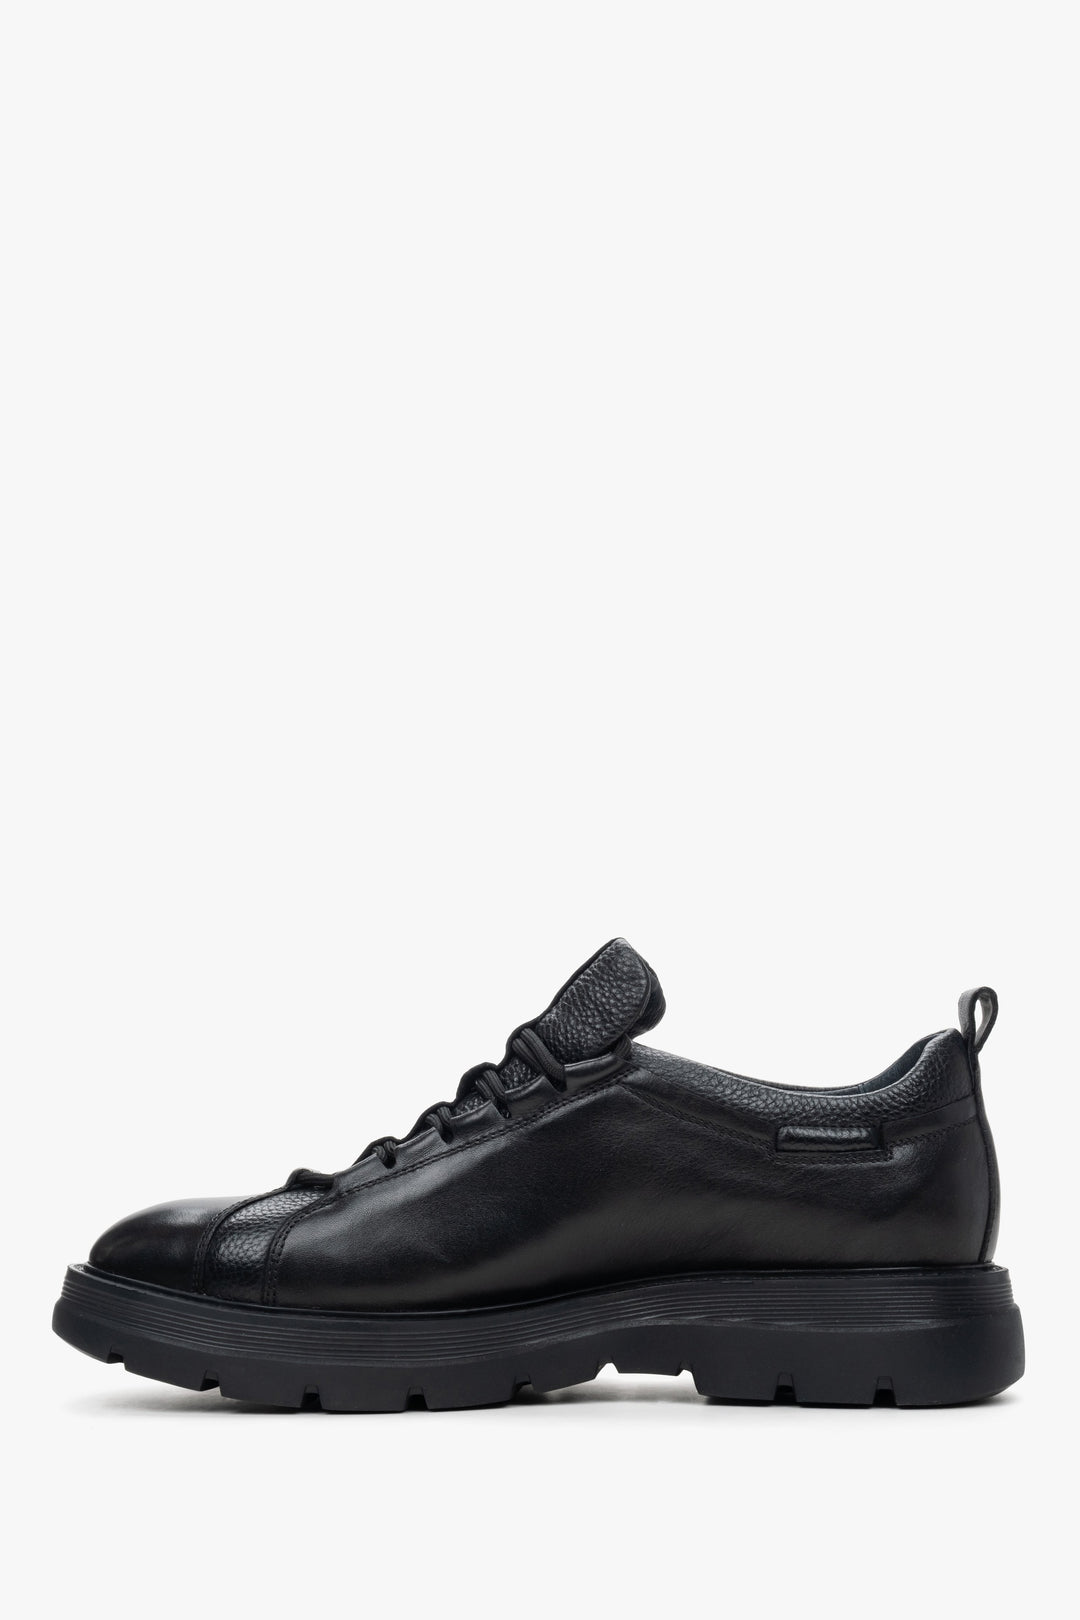 Men's black genuine leather sneakers - shoe profile.